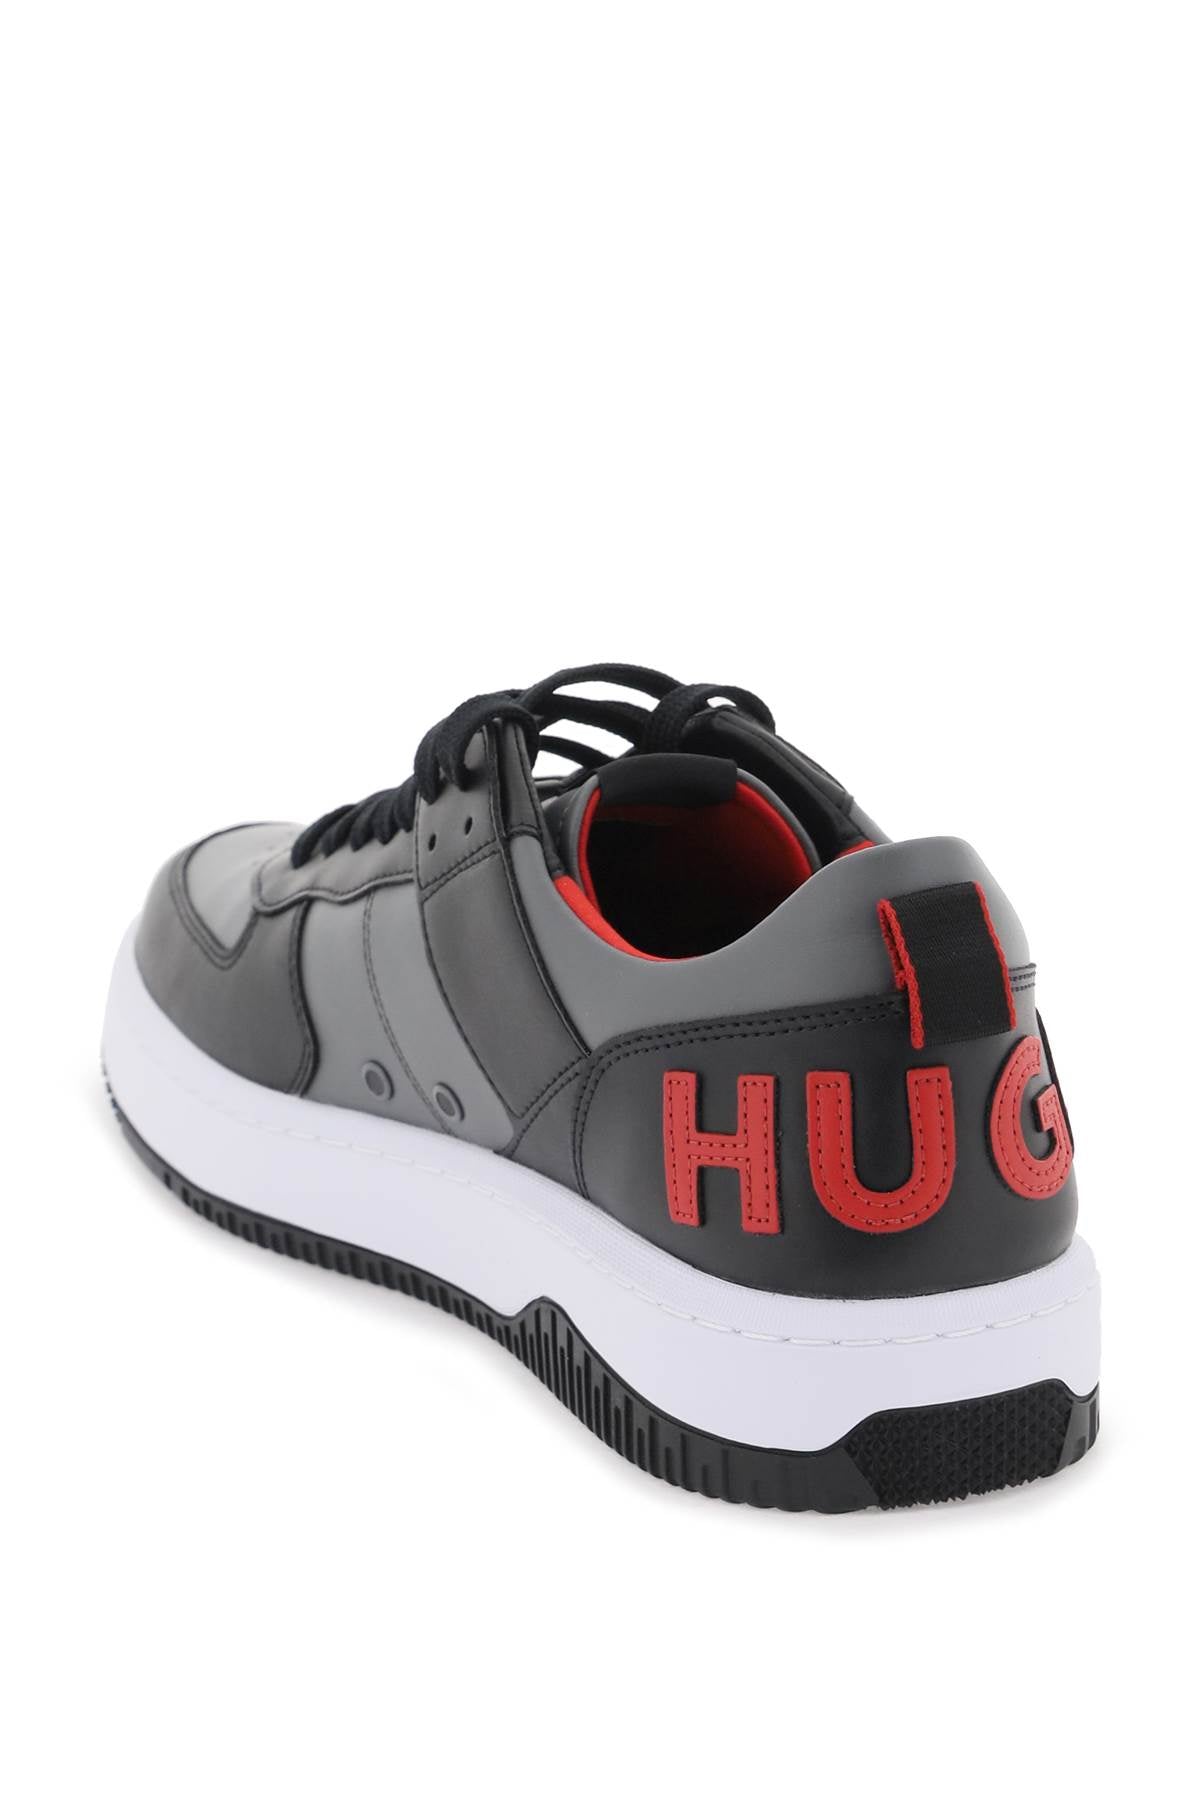 Hugo kilian sneakers-2